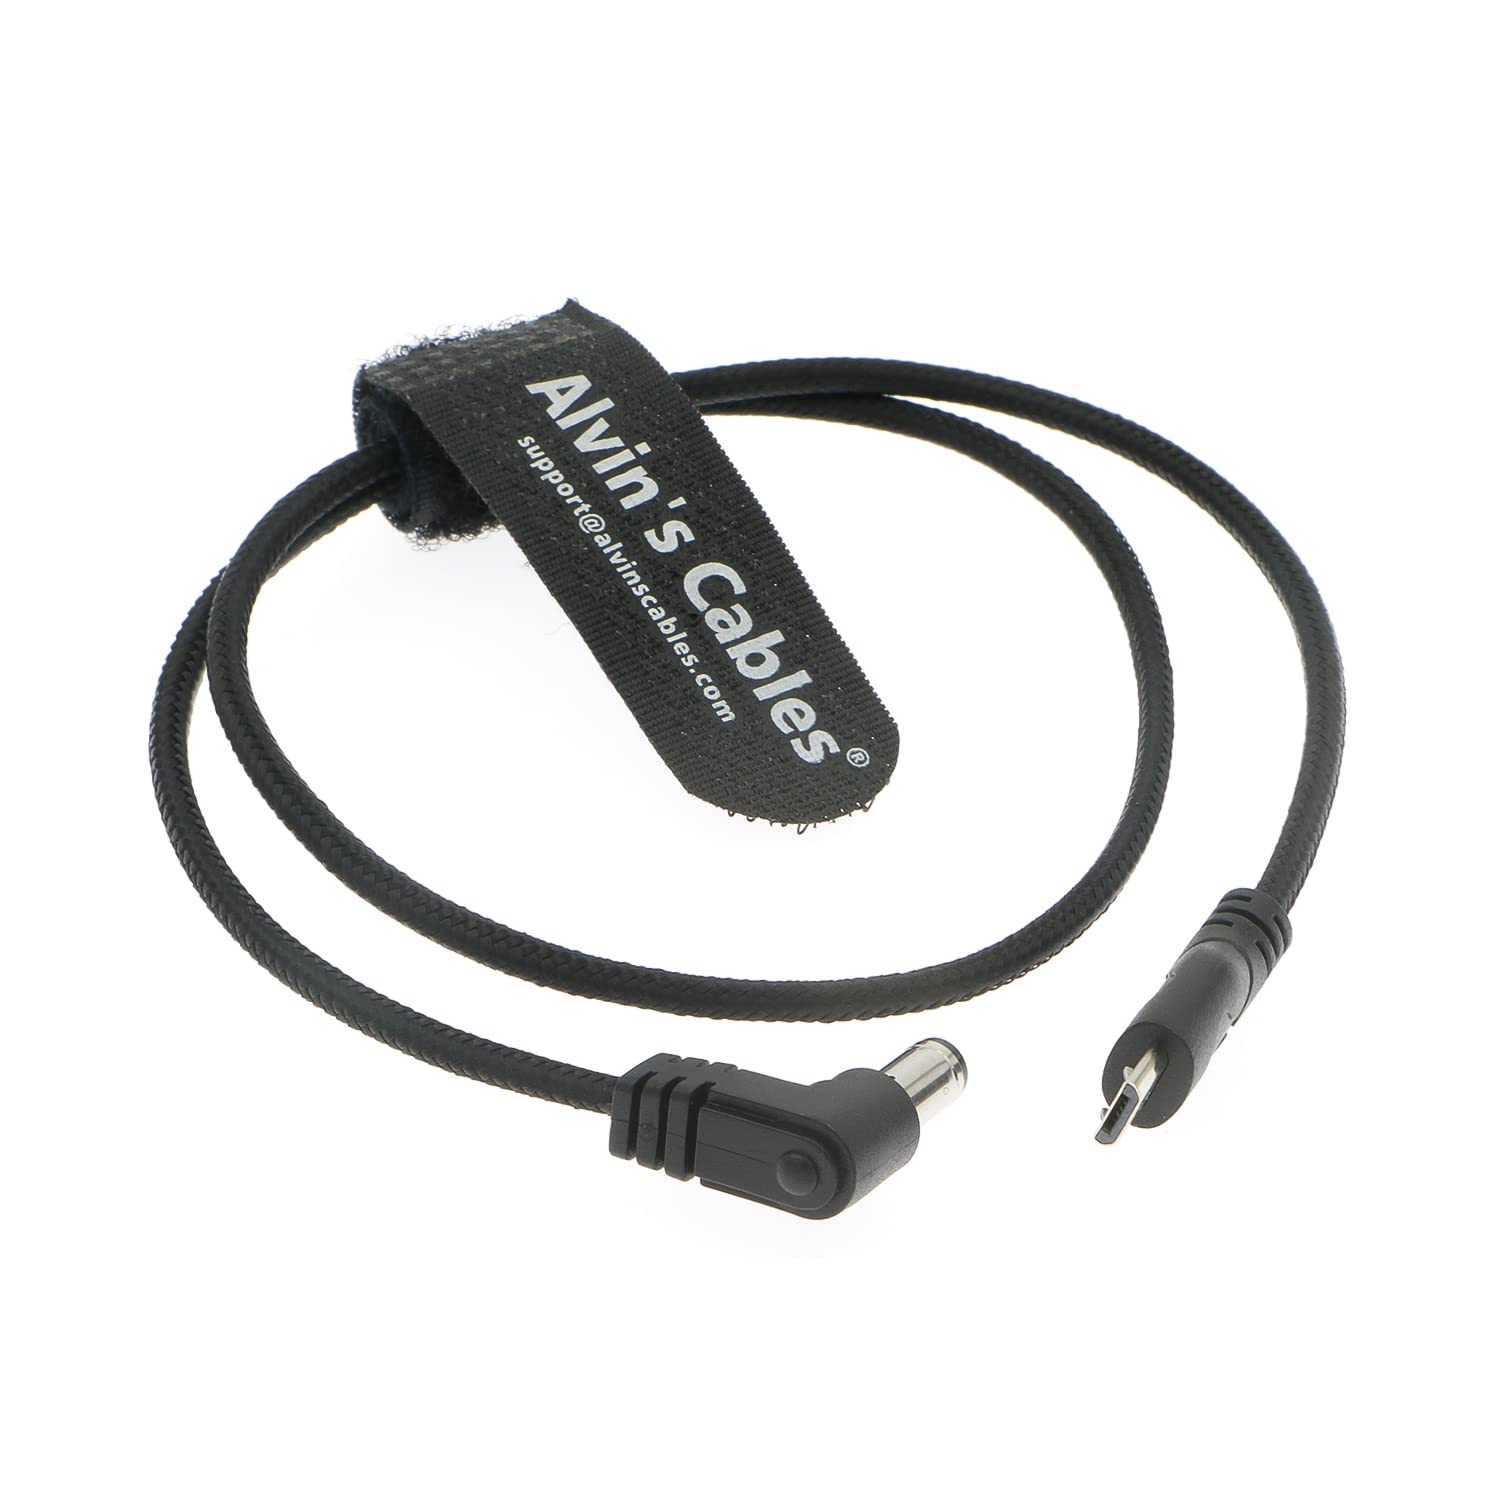 Alvin's Cables Motor Flexible Power-Cable for Tilta-Nucleus-Nano Micro USB to 2.1 DC Barrel Right Angle